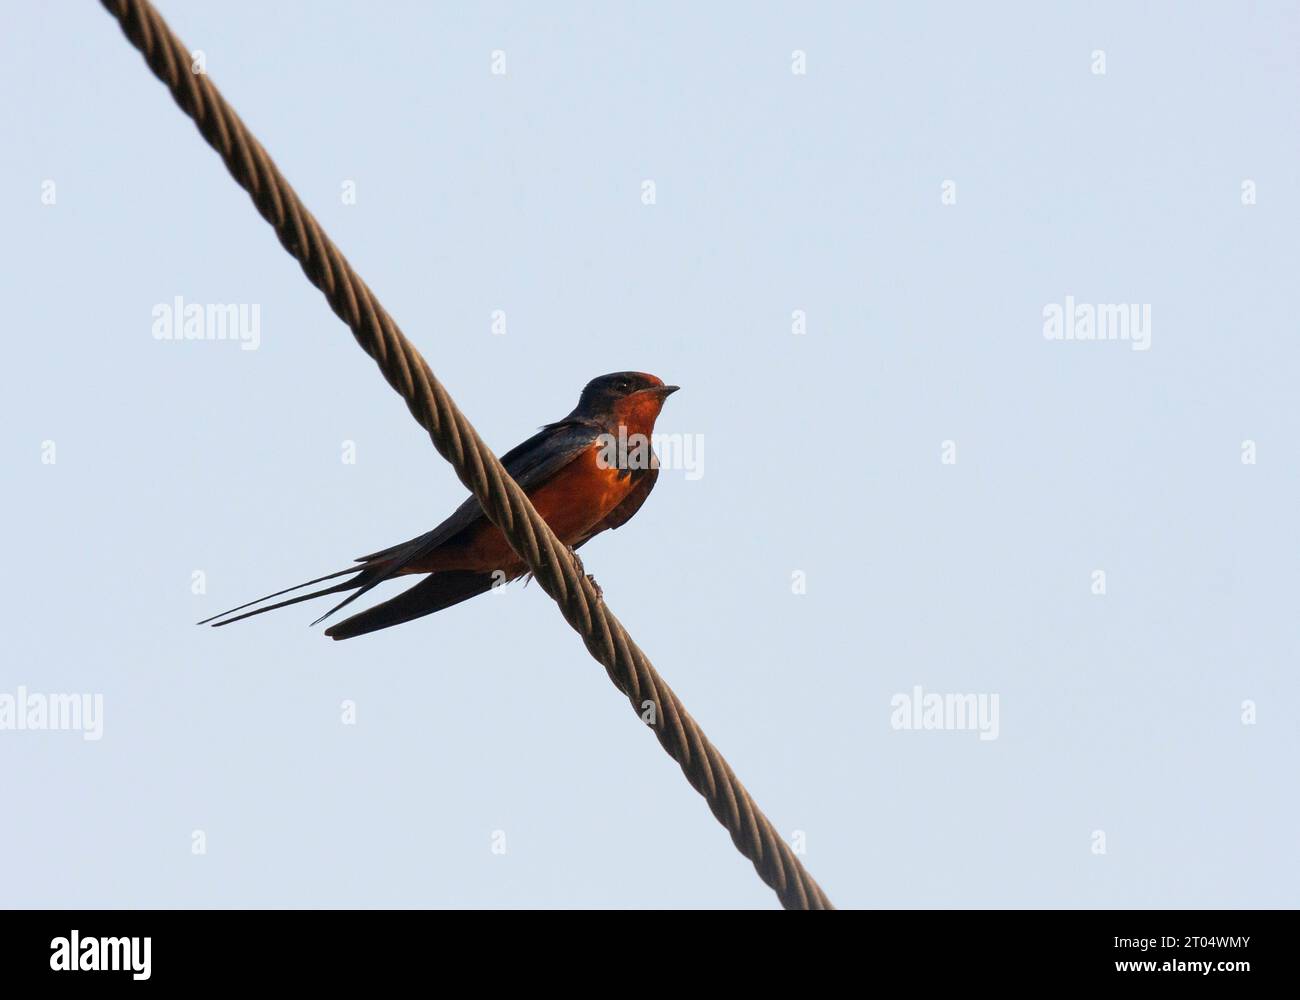 Egyptian barn swallow (Hirundo rustica savignii, Hirundo savignii), resting on a power line, Egypt, Luxor village Stock Photo